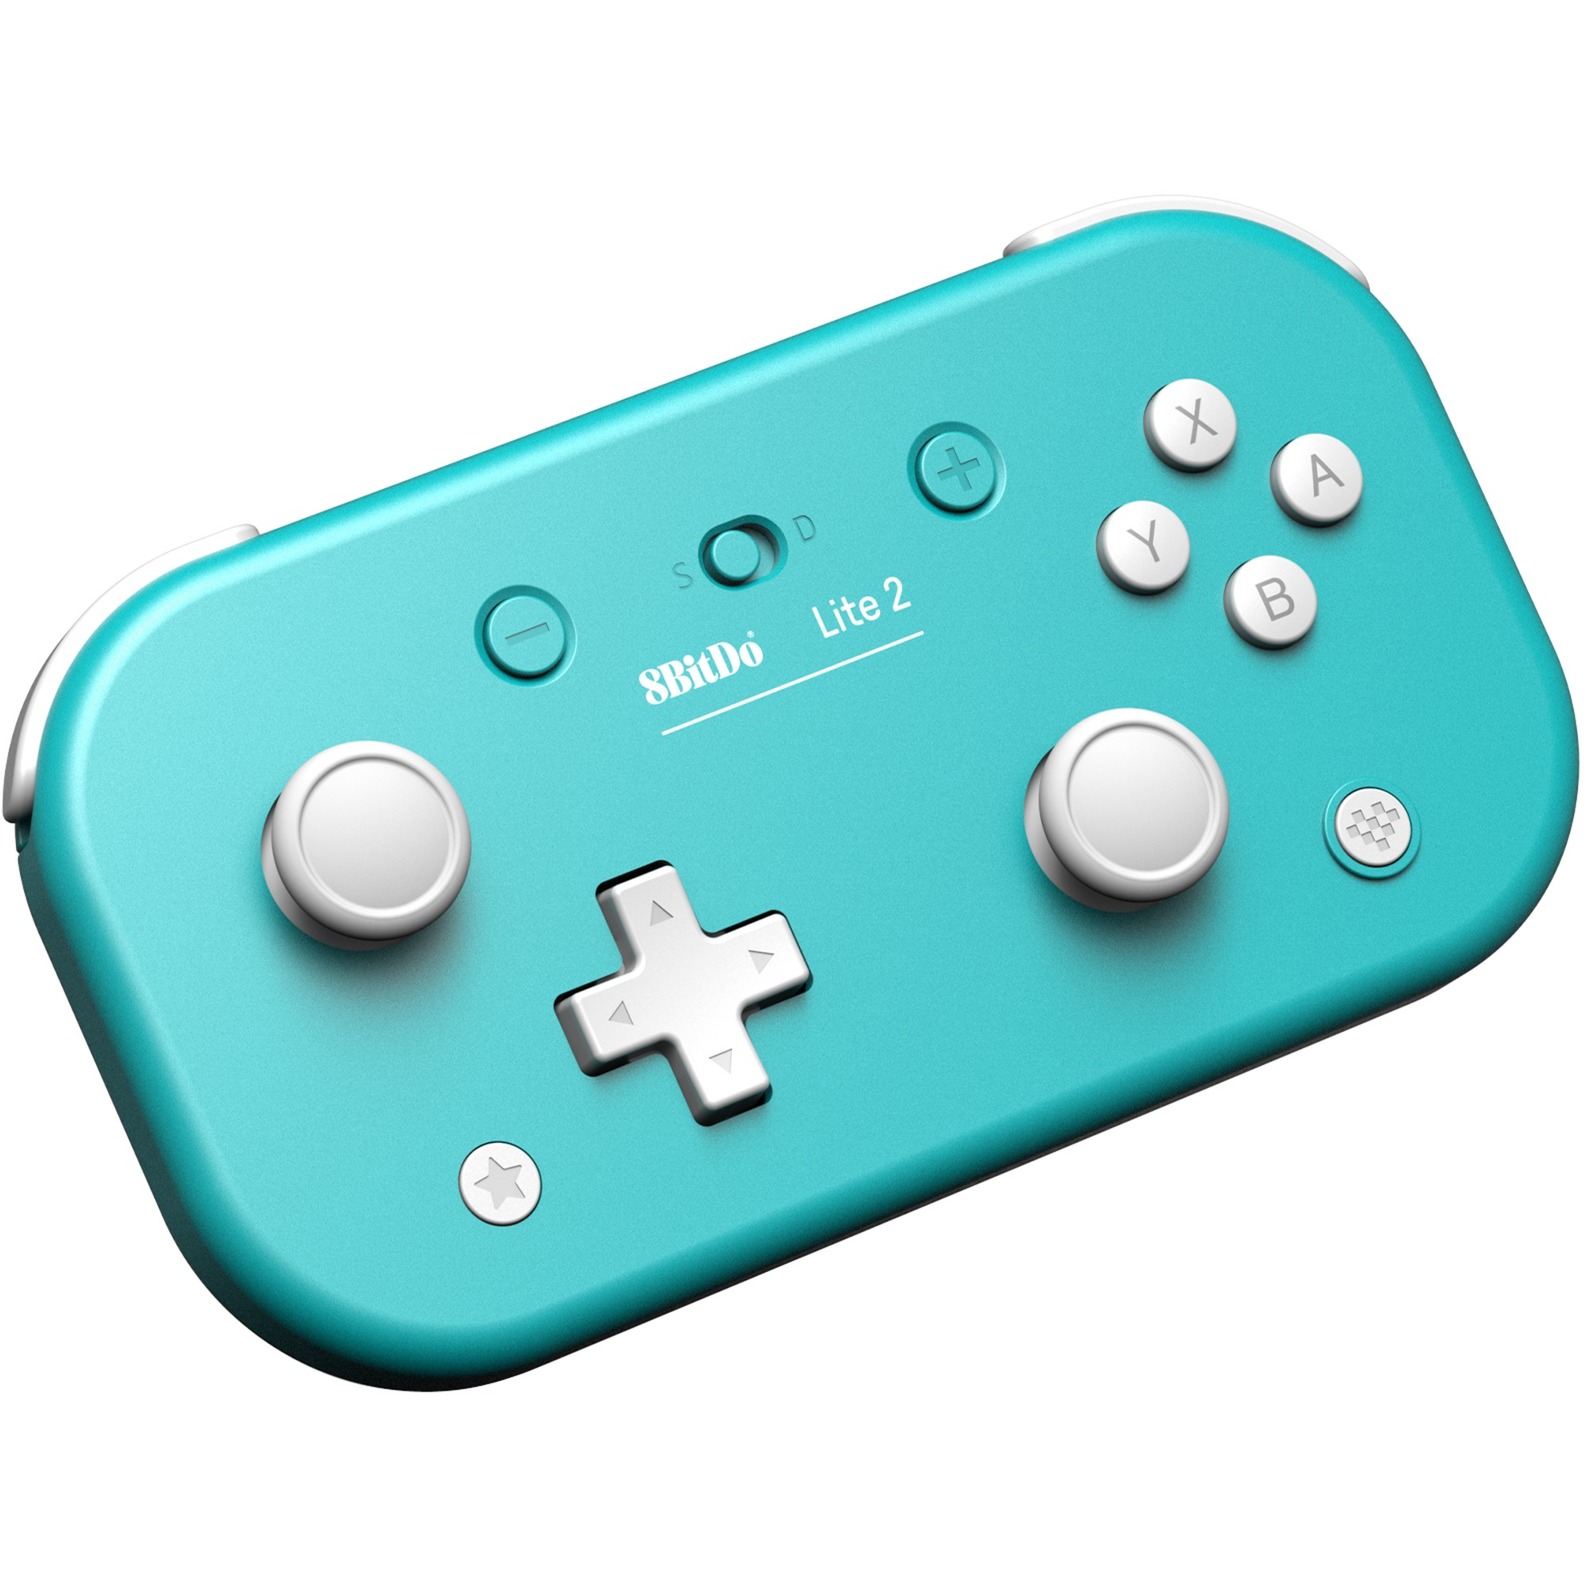 Lite 2 Turquoise, Gamepad von 8BitDo